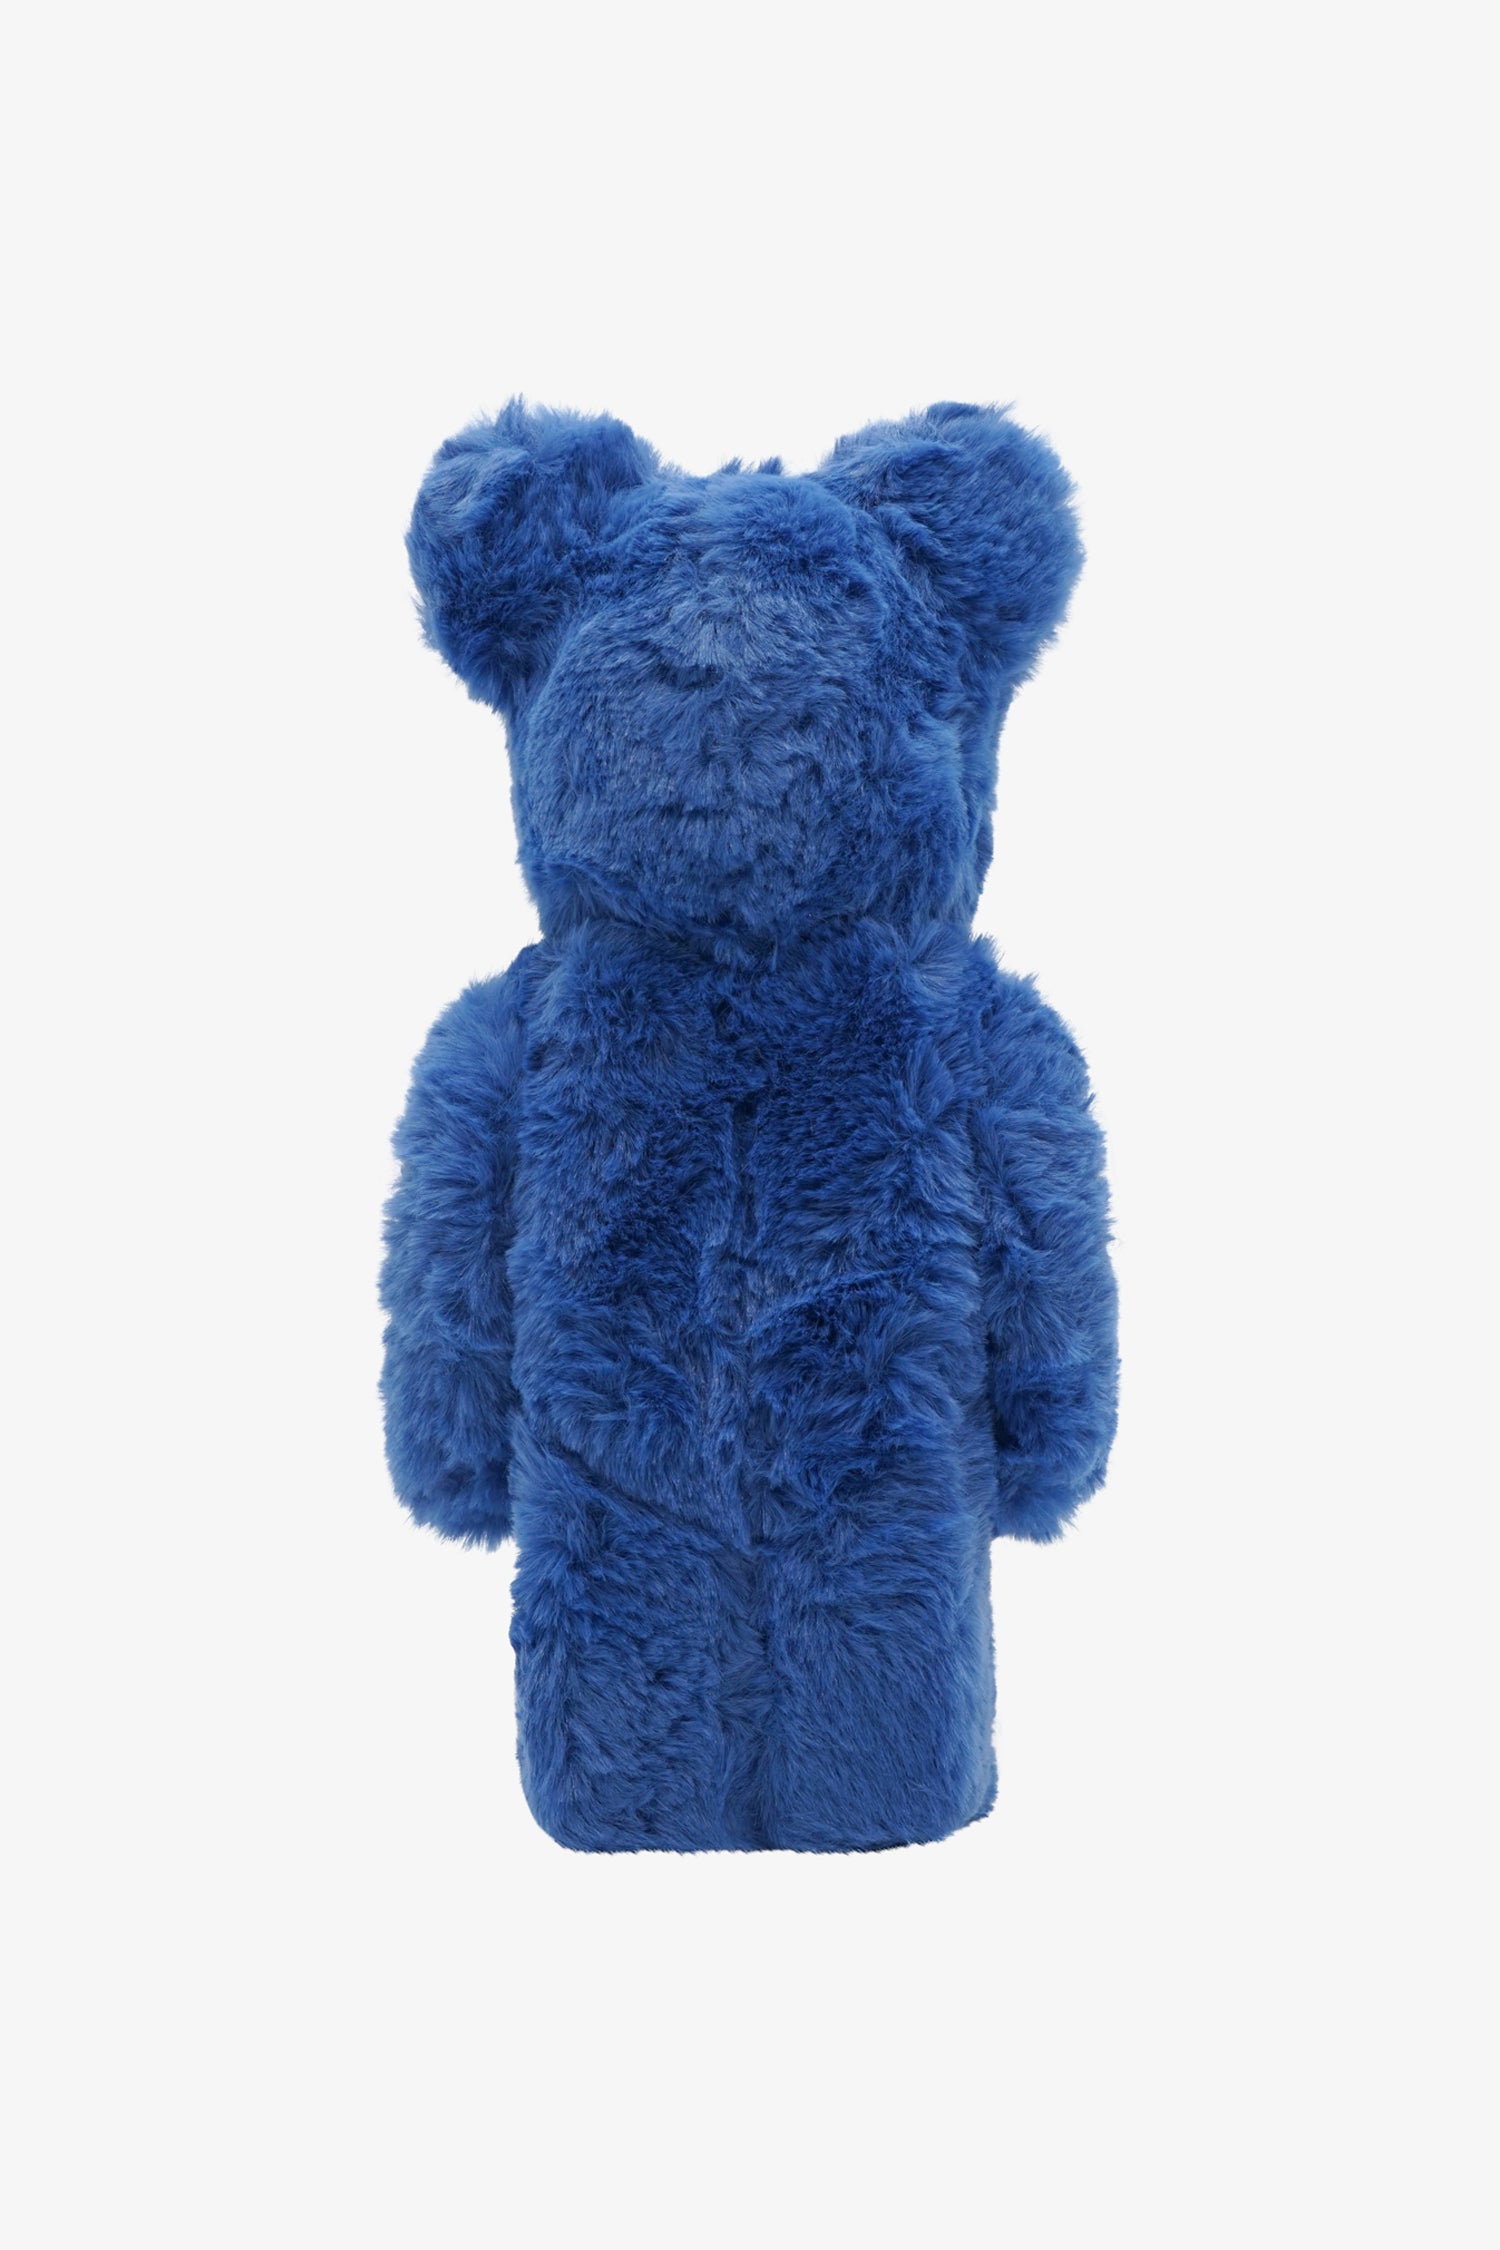 Selectshop FRAME - MEDICOM TOY Sesame Street "Cookie Monster Costume ver." Be@rbrick 1000% Collectibles Dubai